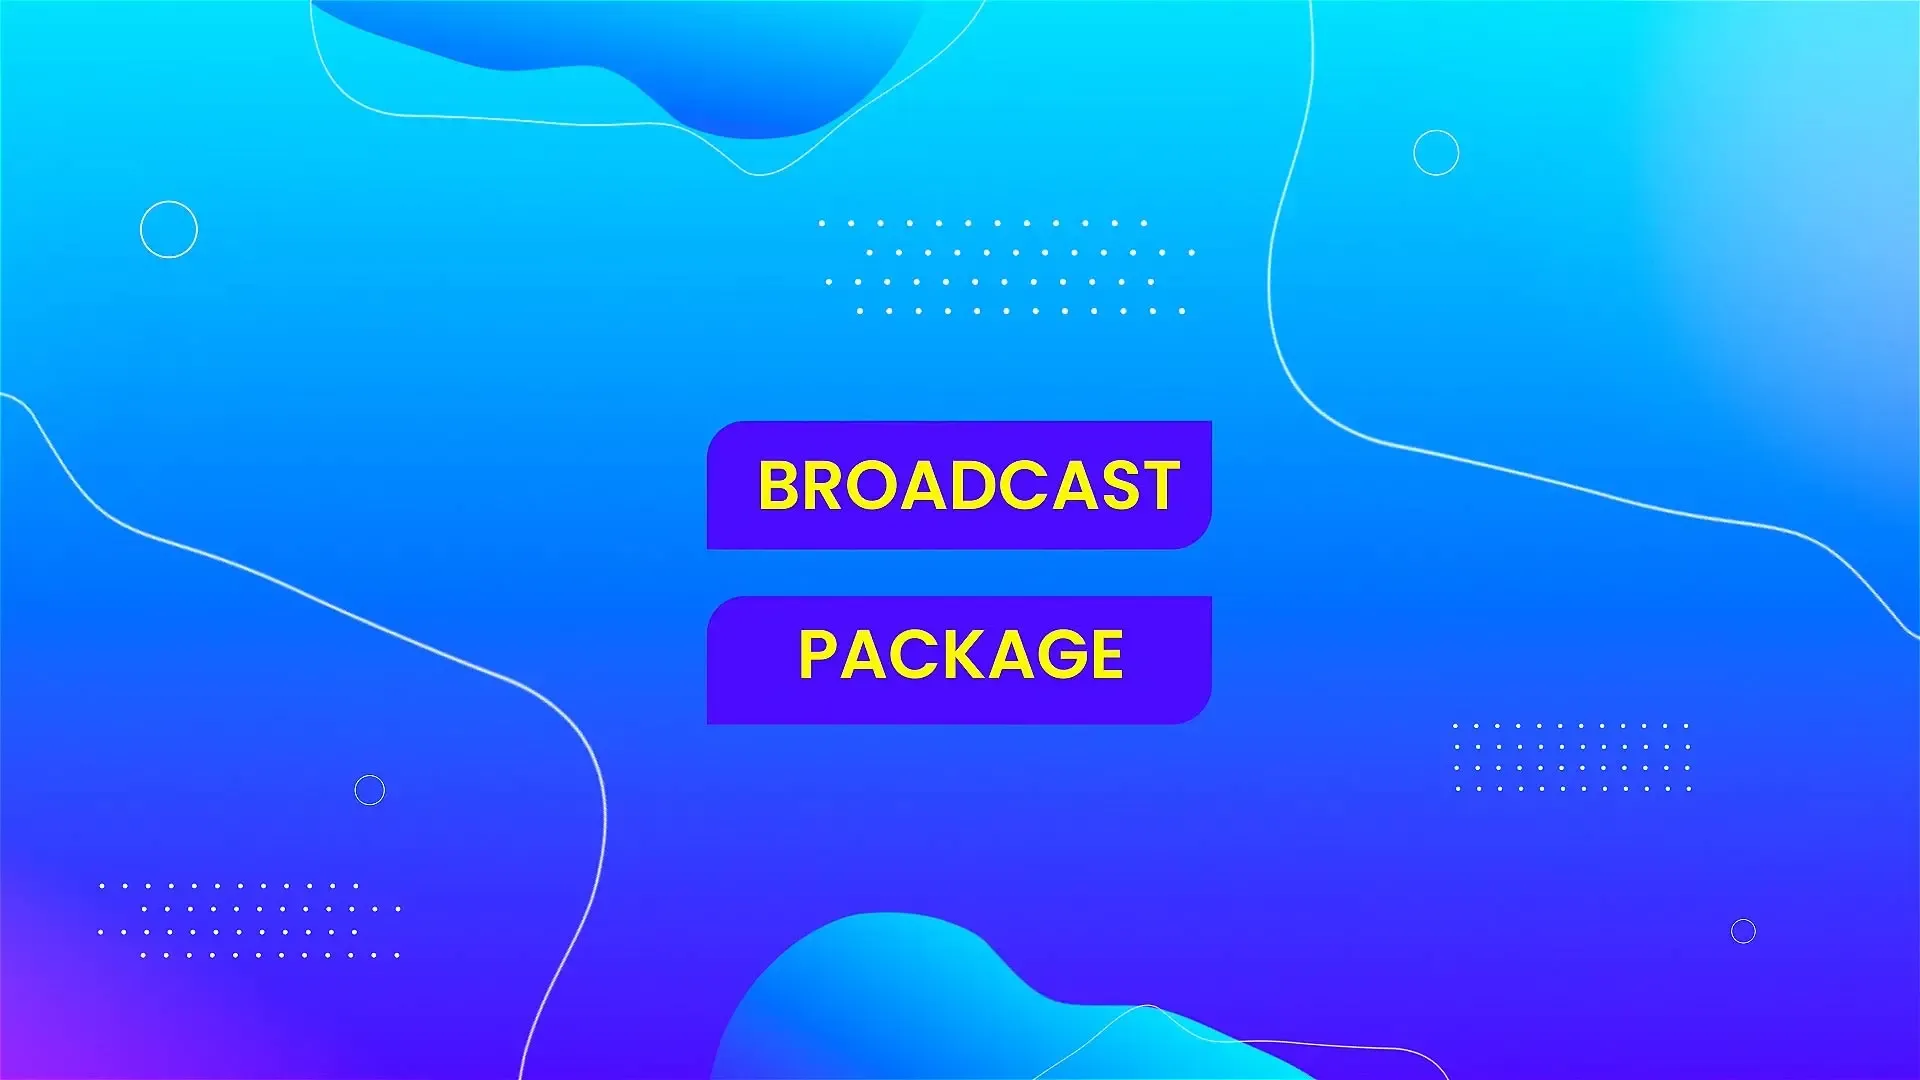 Modern Corporate Visual Broadcast Package